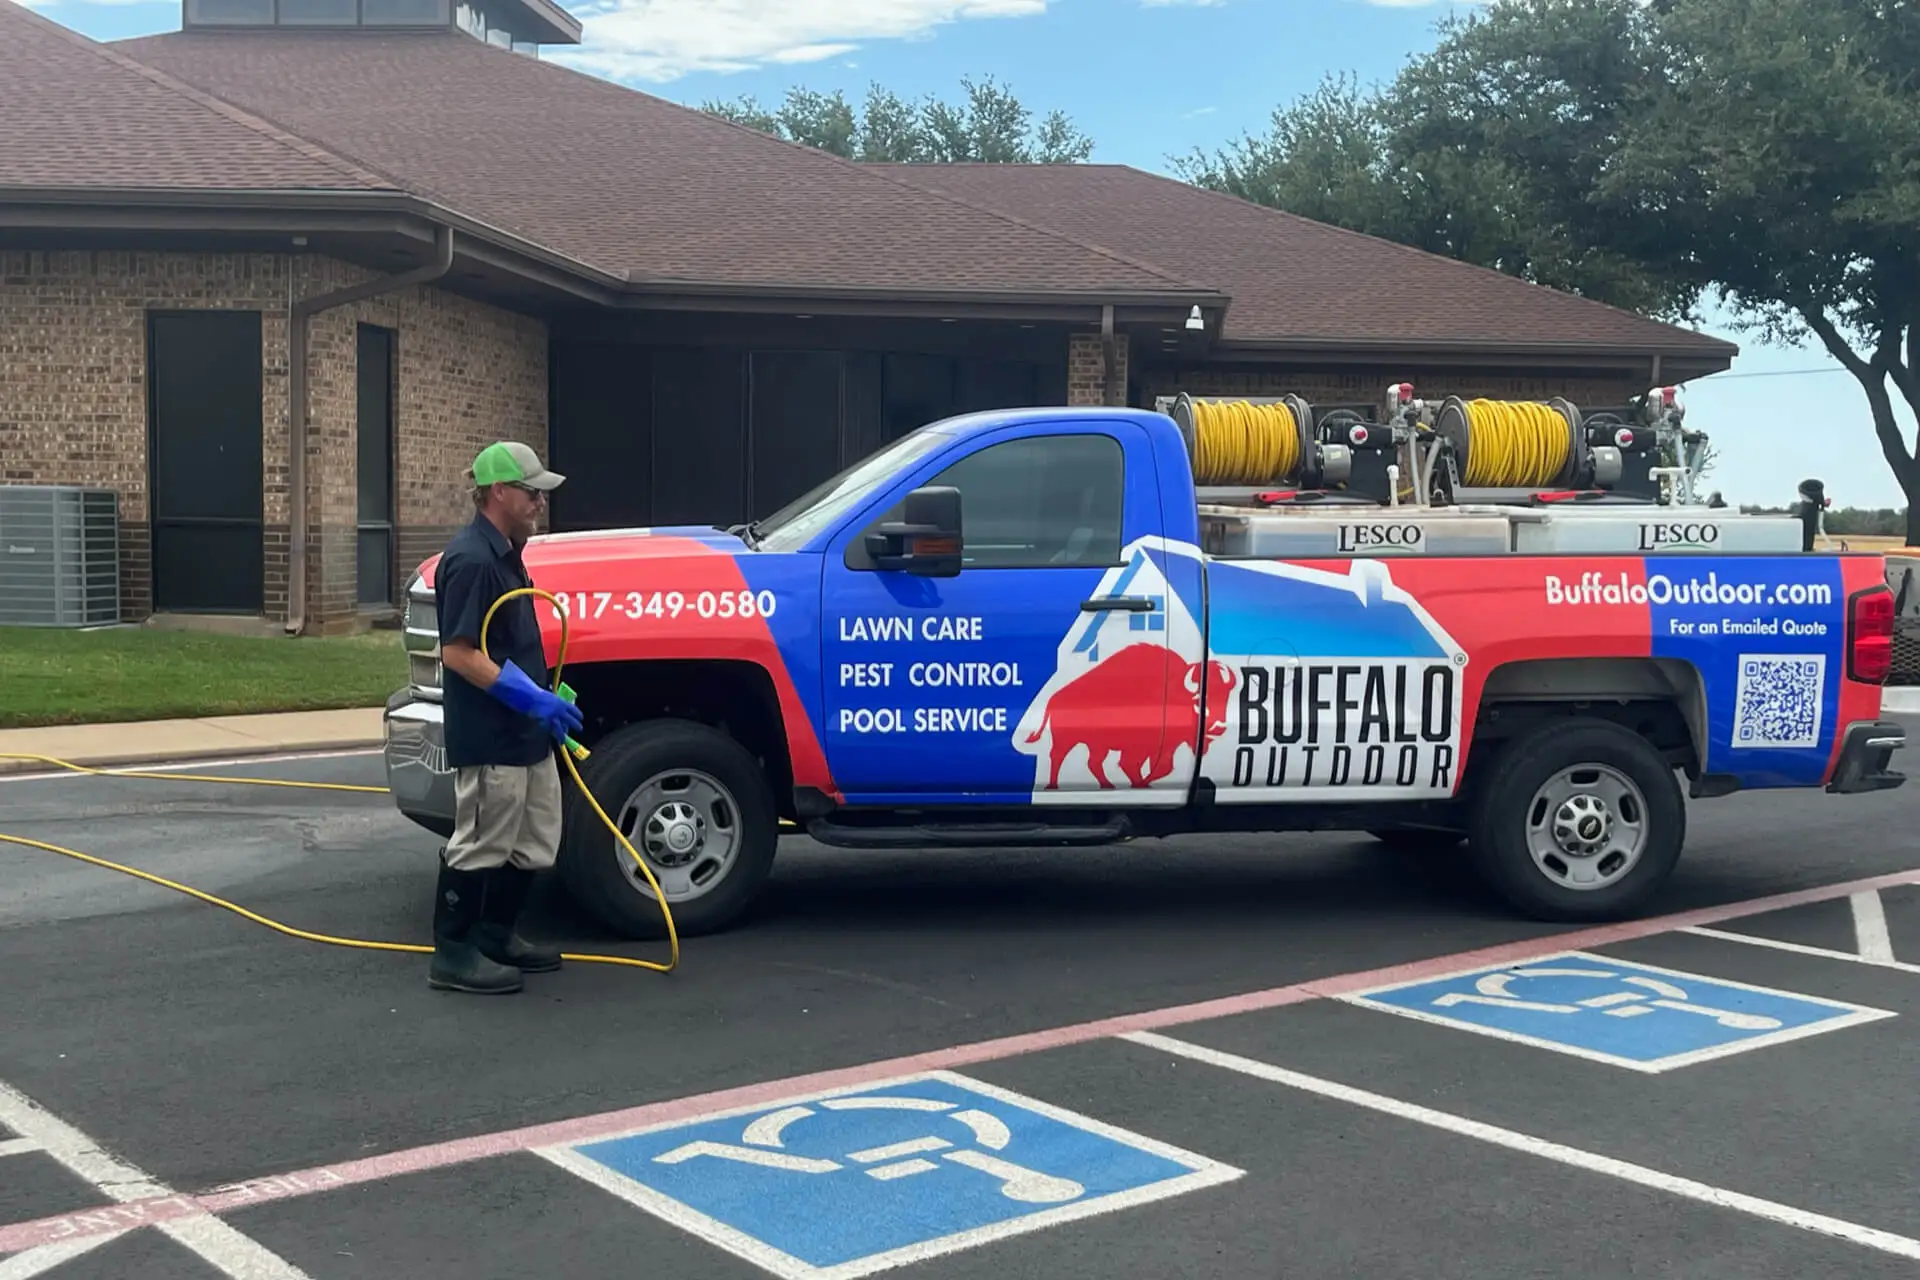 Buffalo Outdoor work trucks in Keller, Texas.